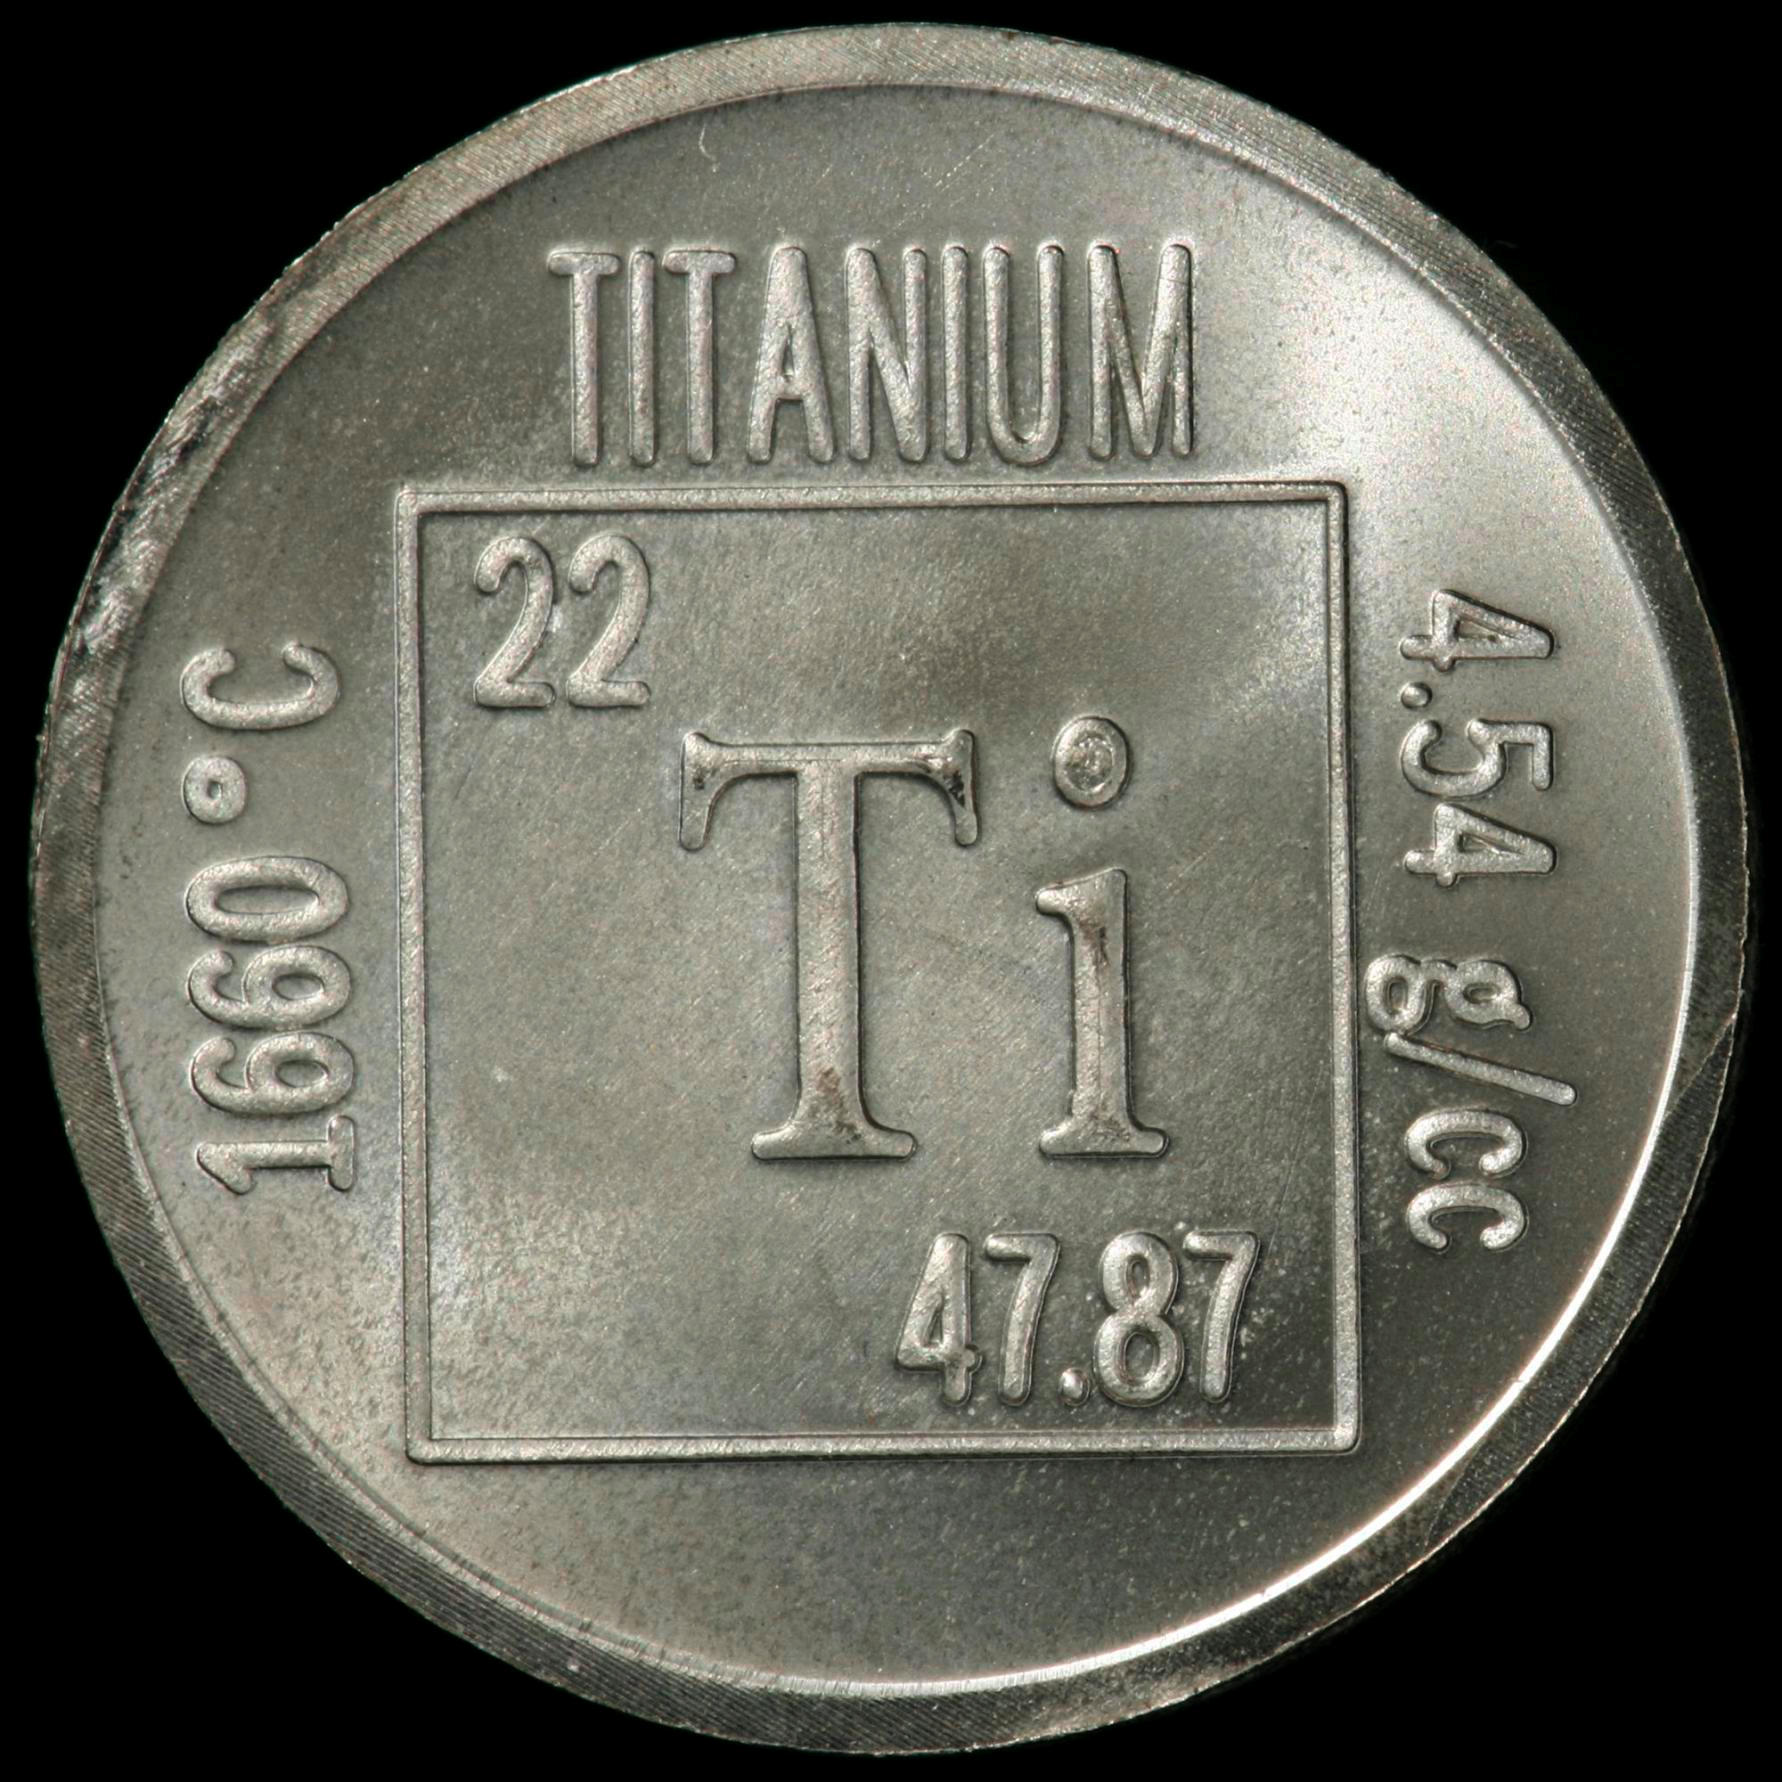 Titanium. Титан Titanium. Титан (элемент). Цирконий элемент. Титан химический элемент.